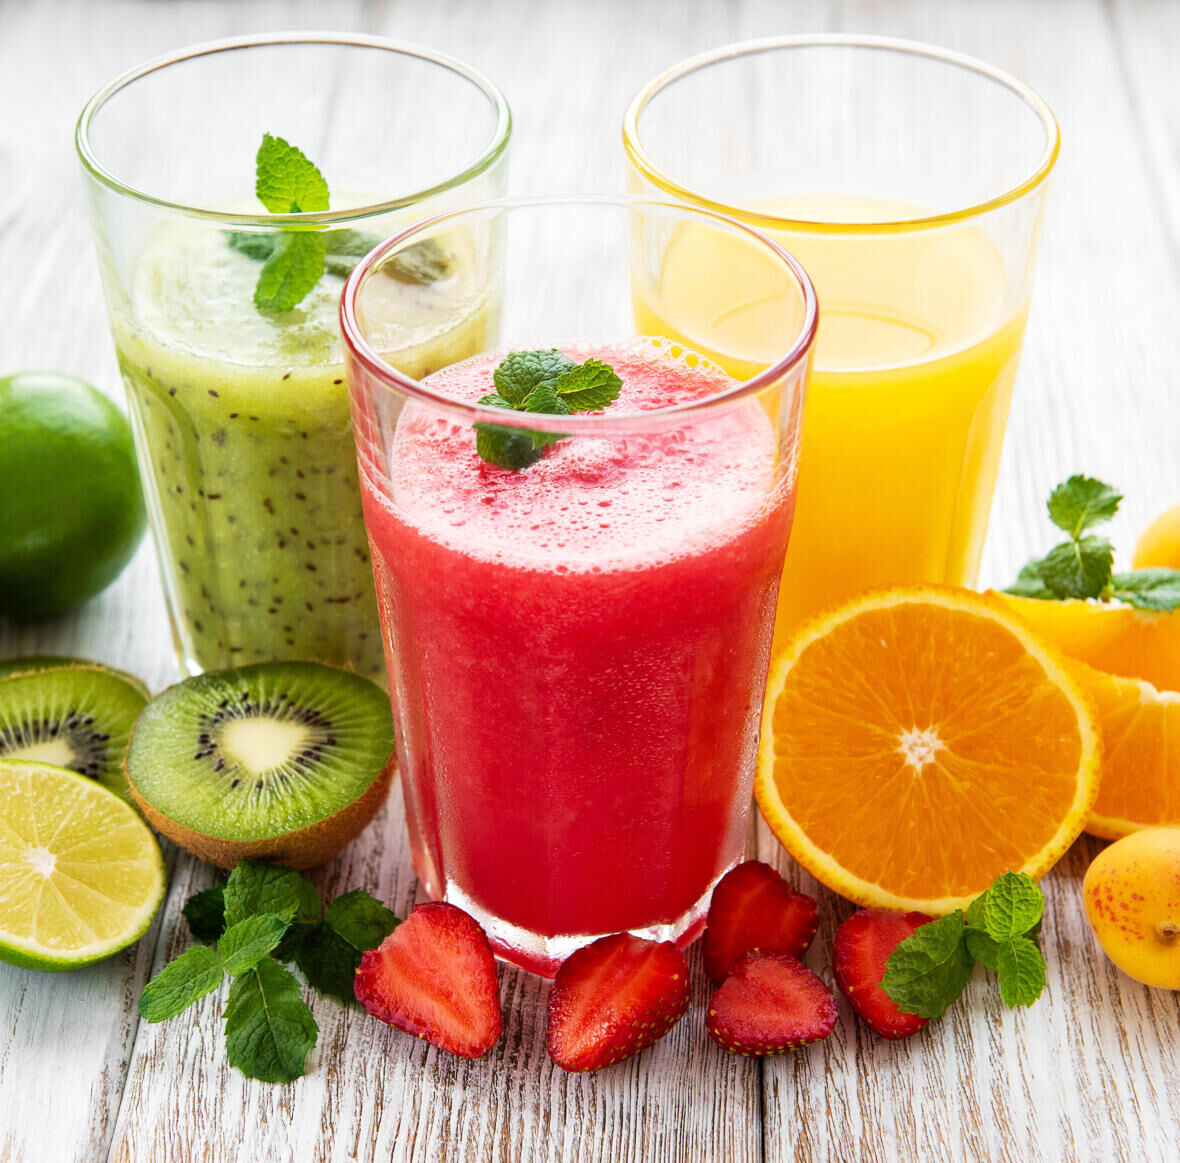 Fake health foods: fruit juice